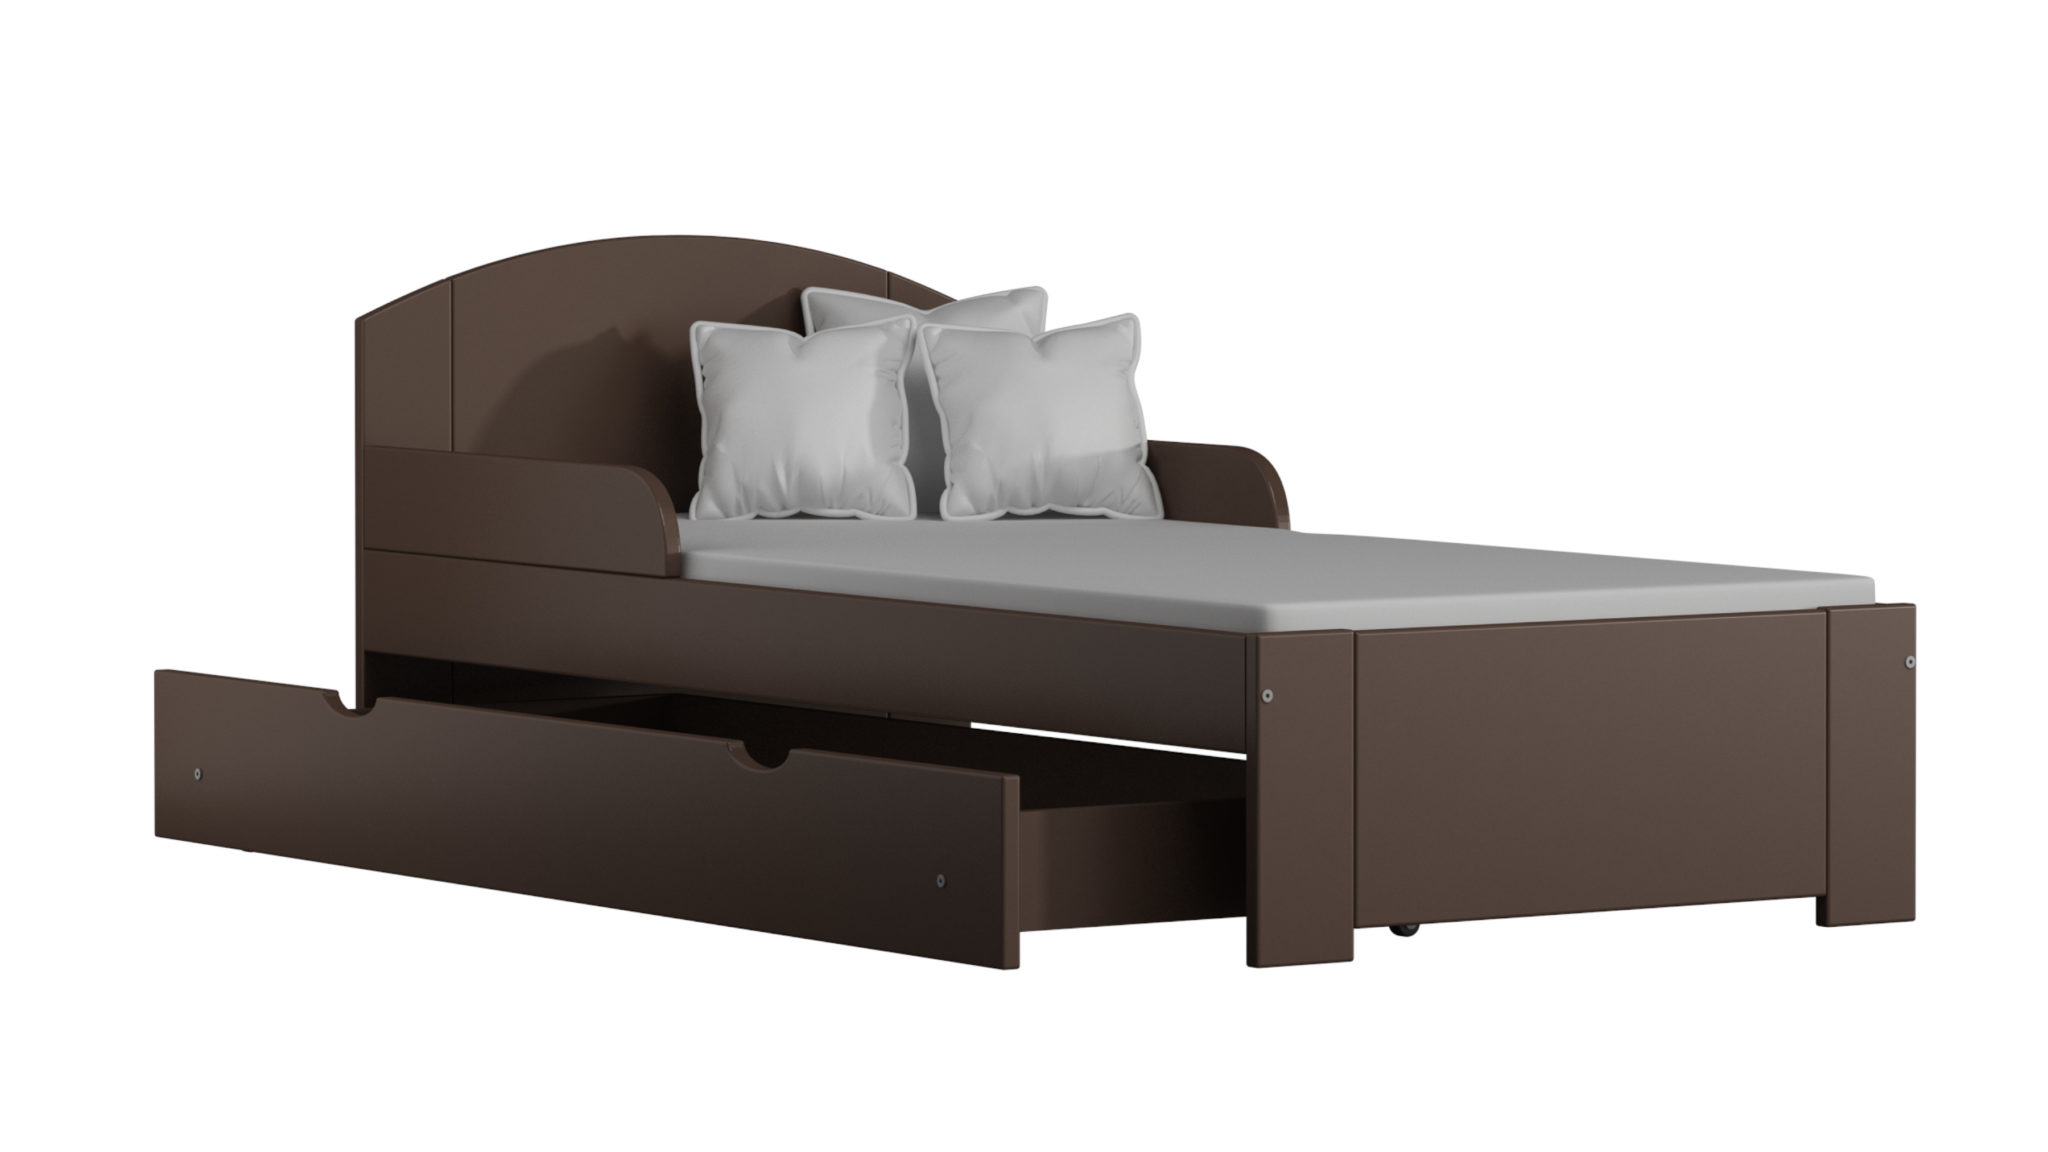 Dětská postel Bili S 180x80 10 barevných variant !!!